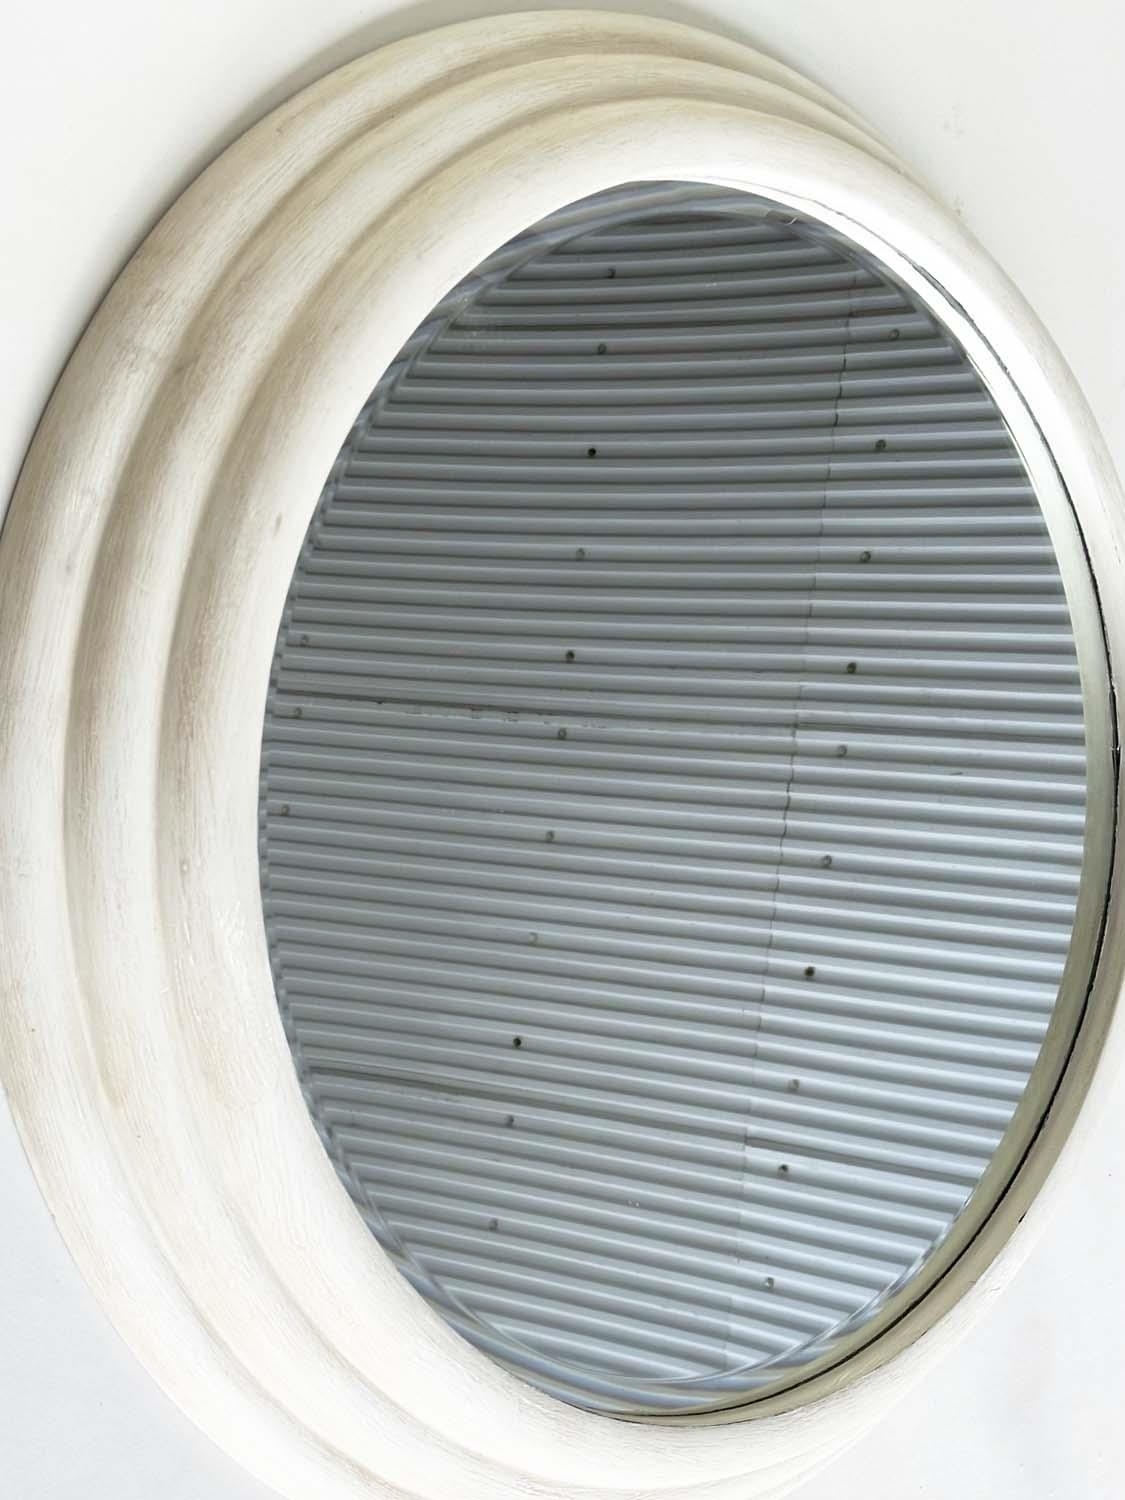 CIRCULAR WALL MIRROR, grey Bibendum style with bevelled glass, 110cm W. - Image 4 of 10